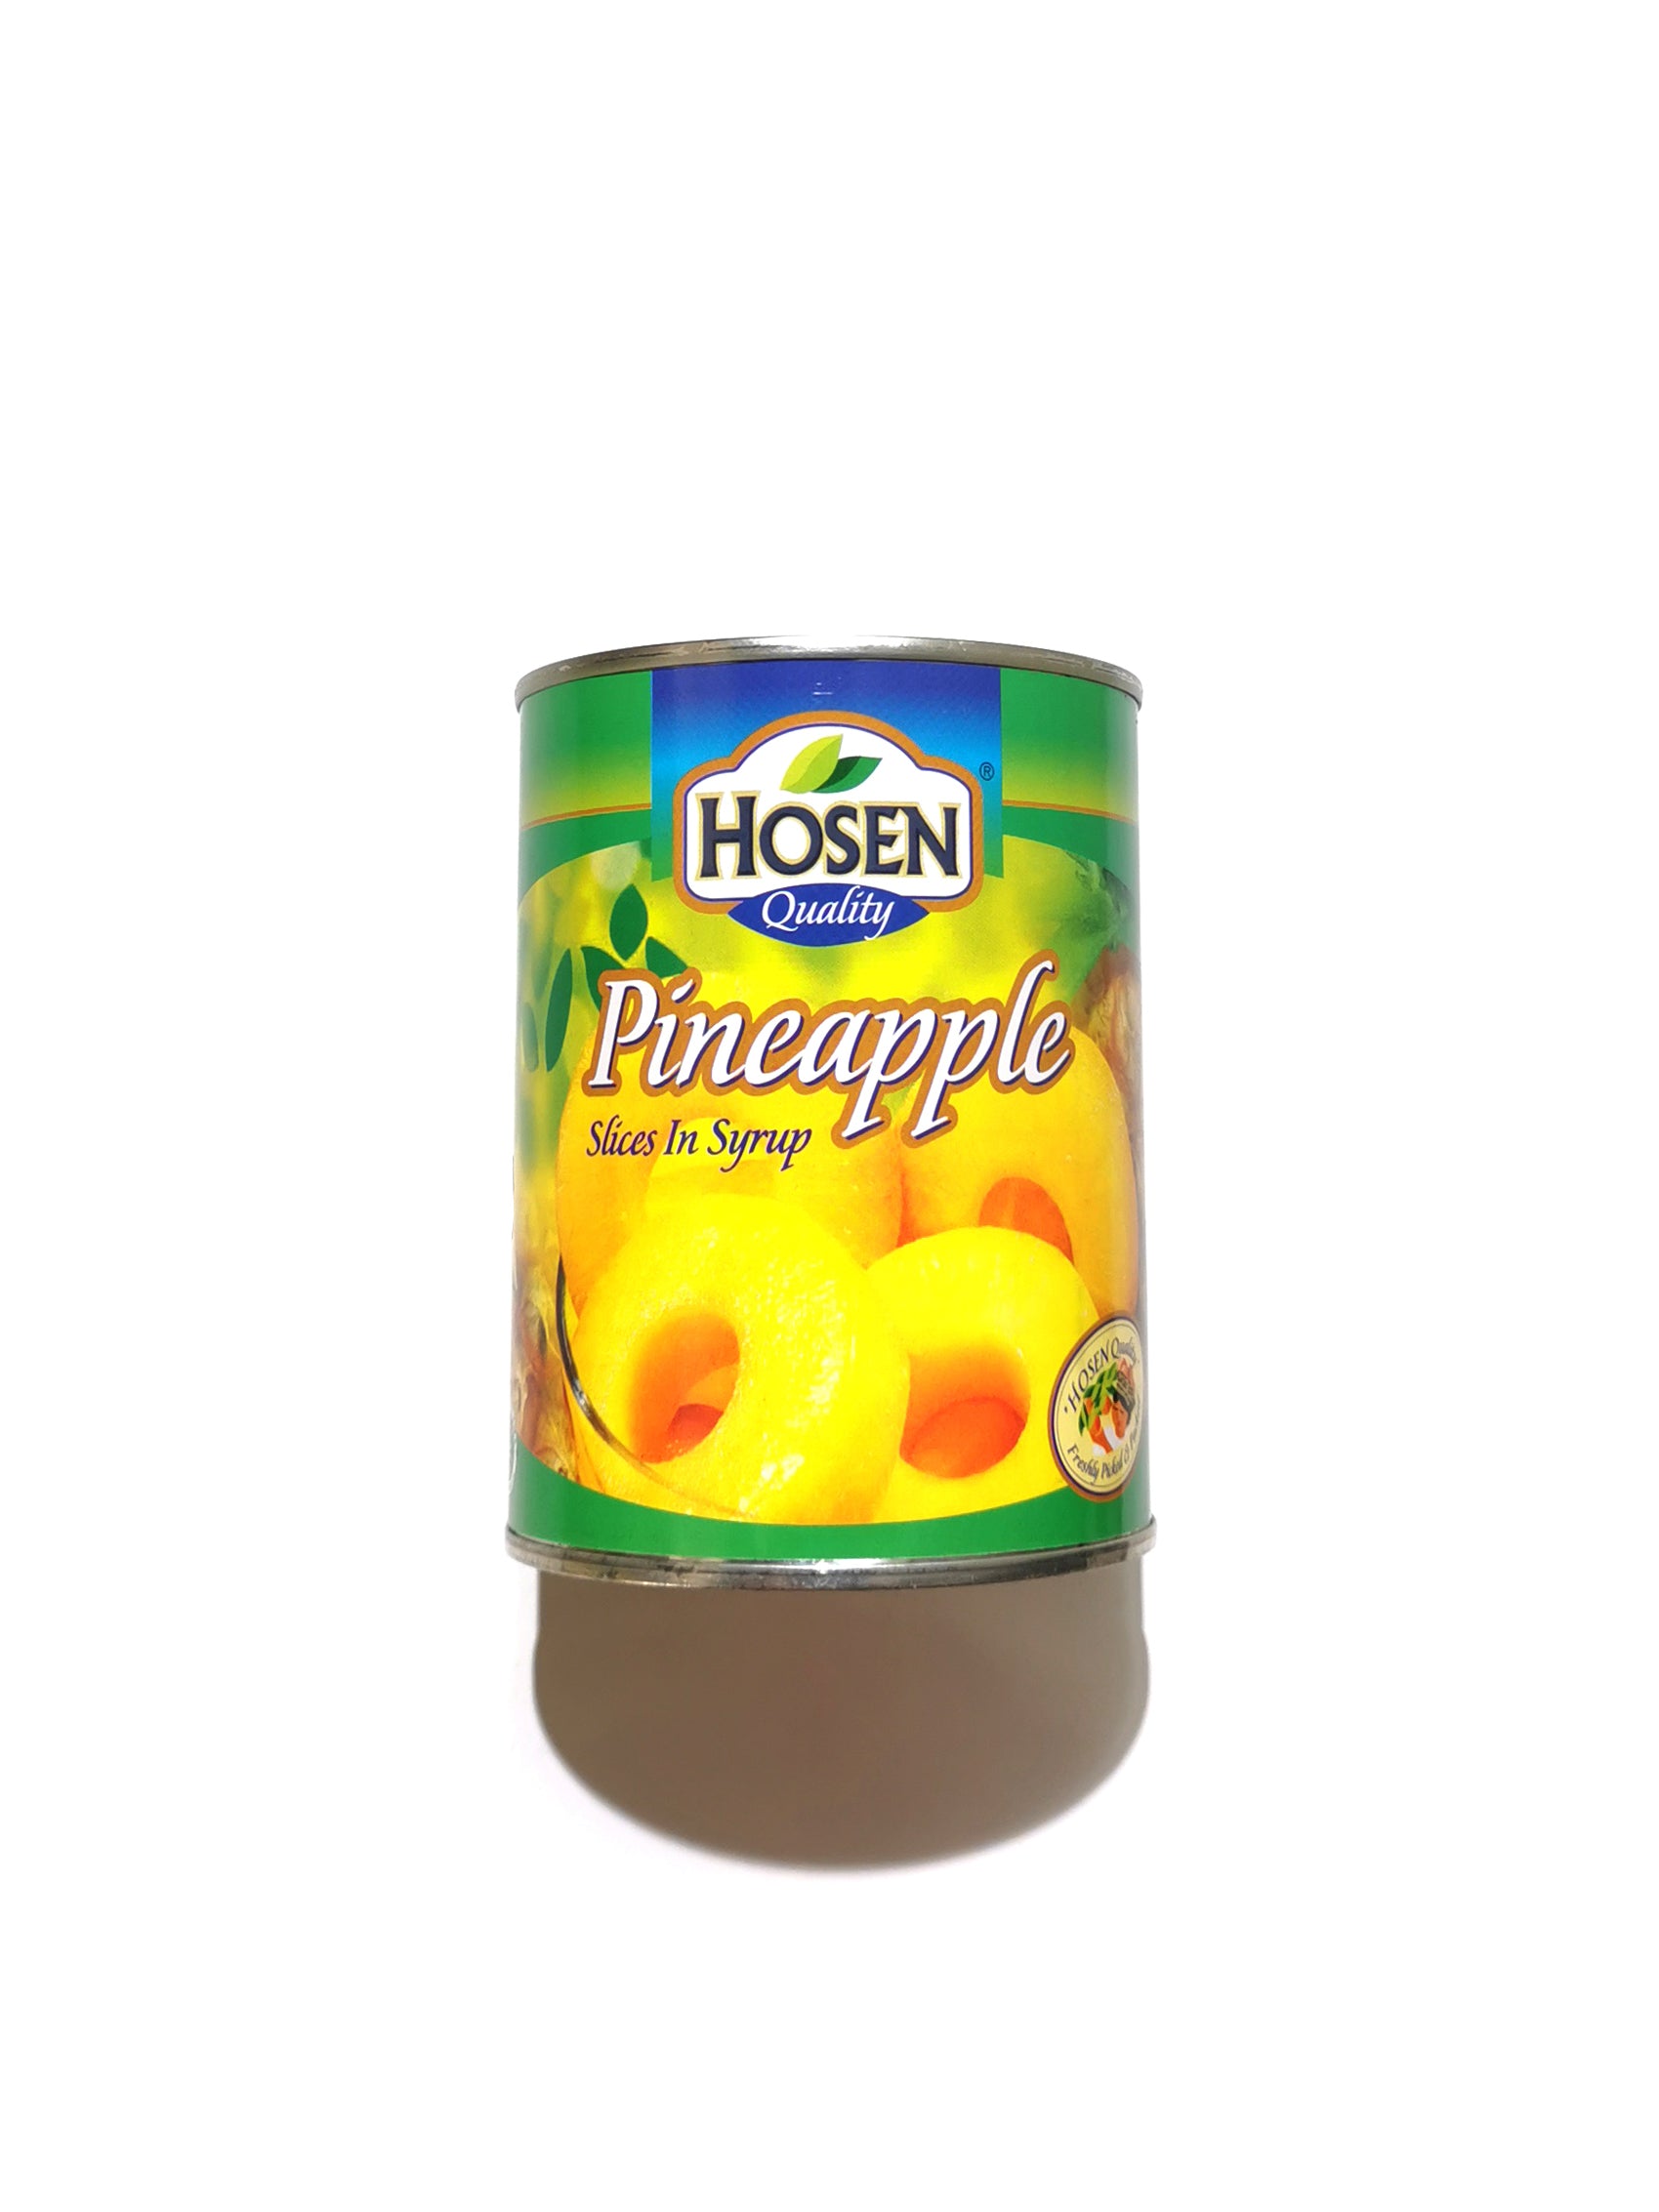 Hosen Pineapple Slices in Syrup 好顺品质鳳梨片 - 565g